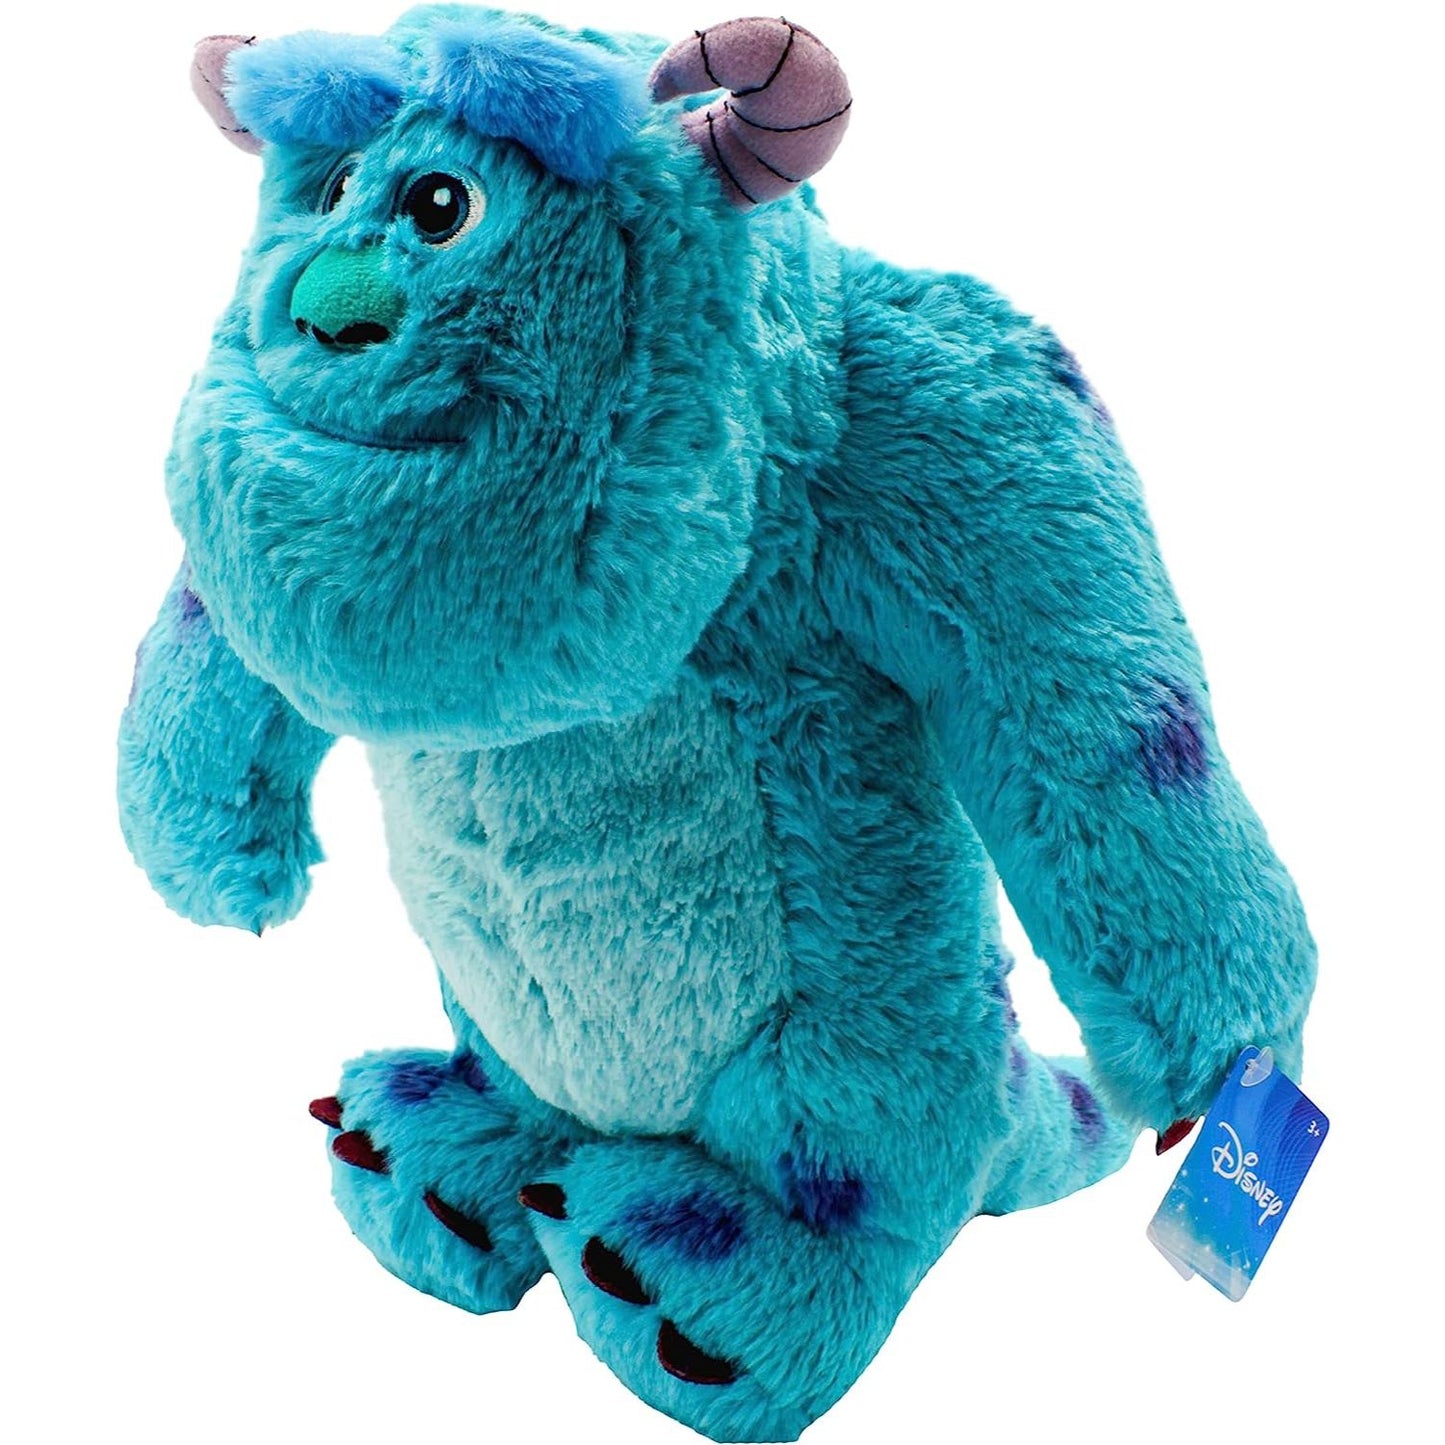 Disney - Pixar - Monsters Inc. - Soft Plush Sulley side pose - Heretoserveyou